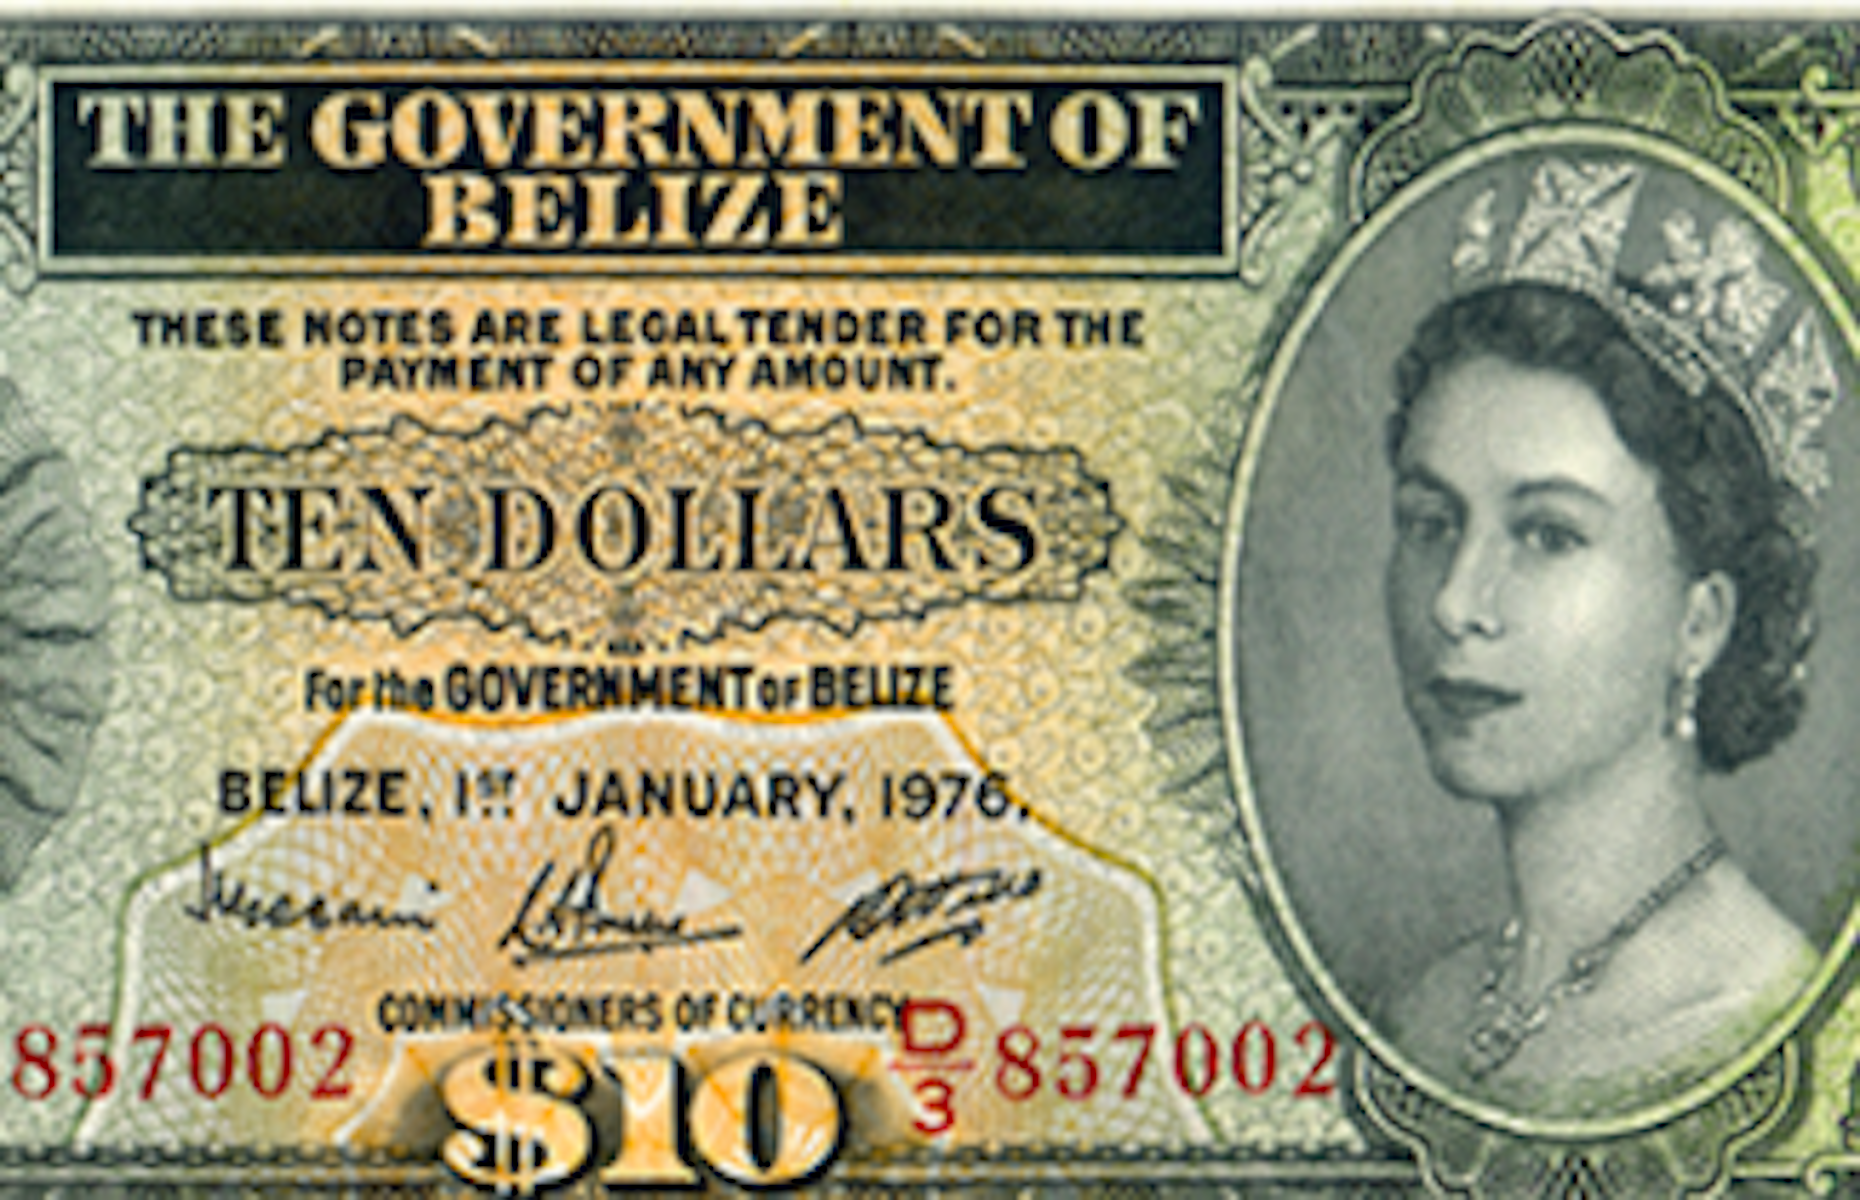 Belize $10 dollar note (1974)